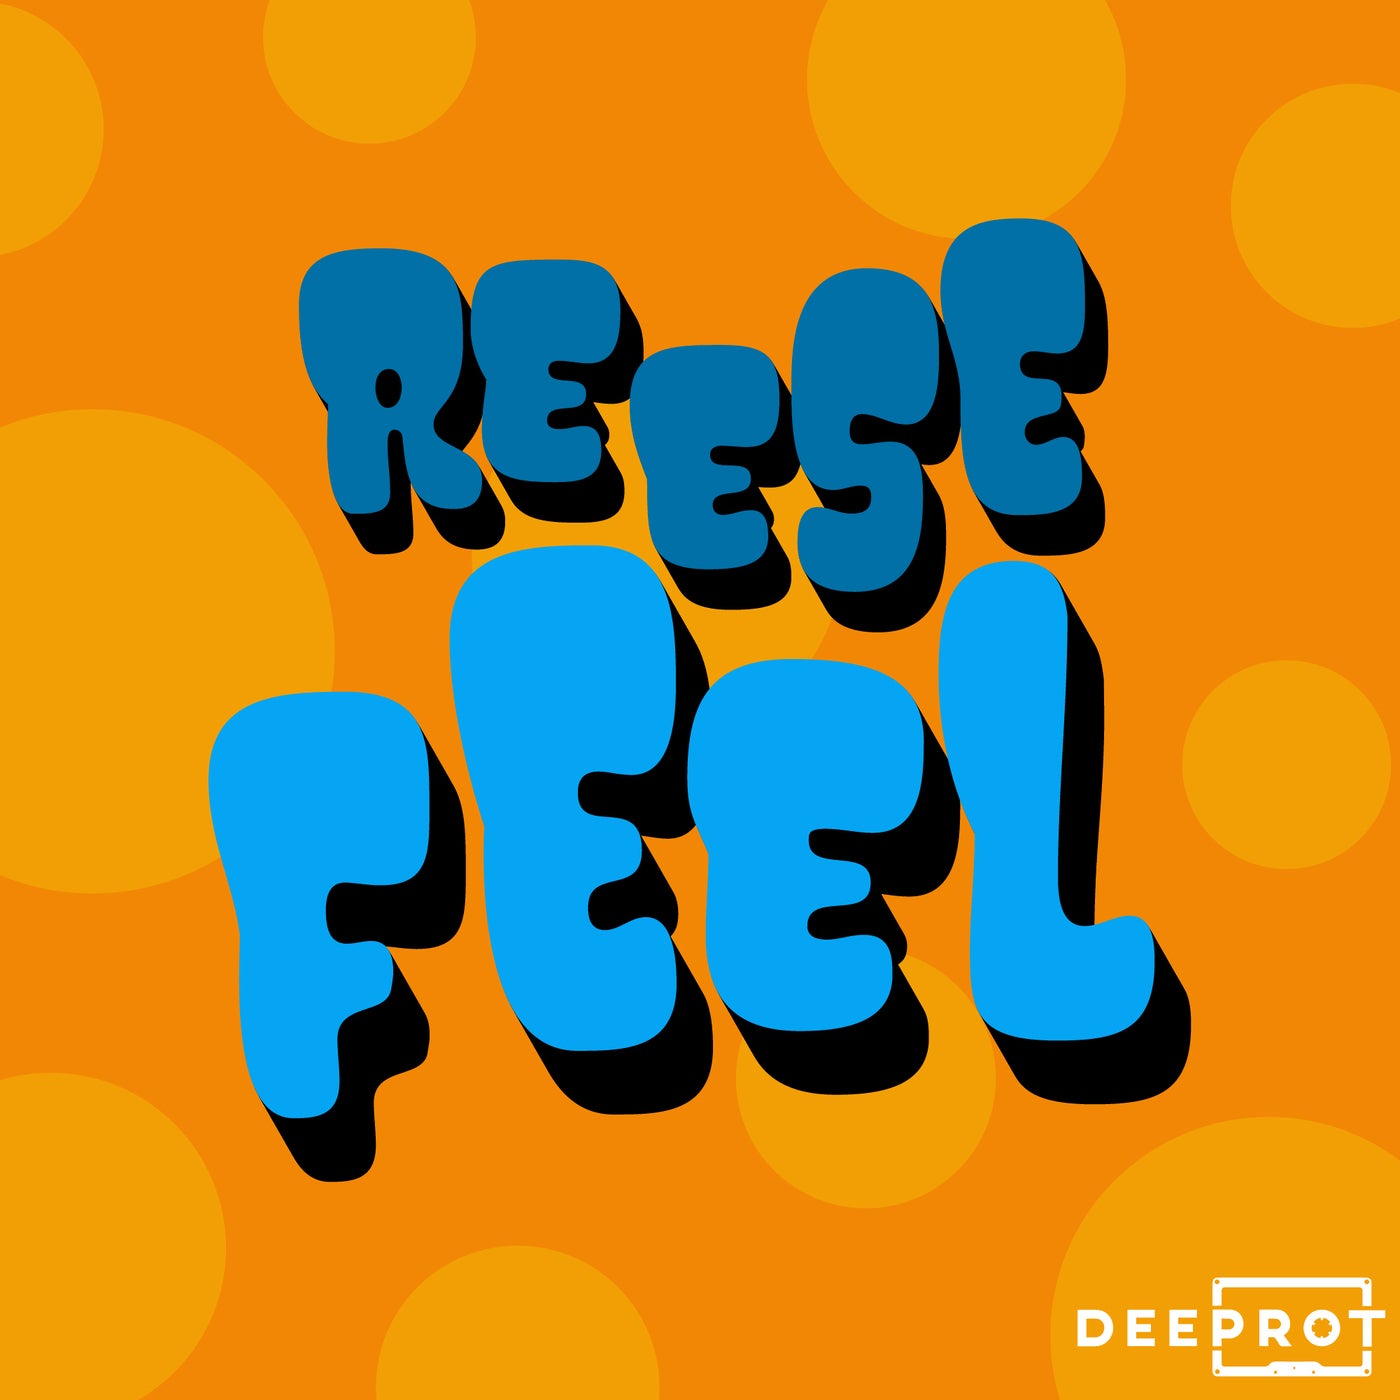 Feel